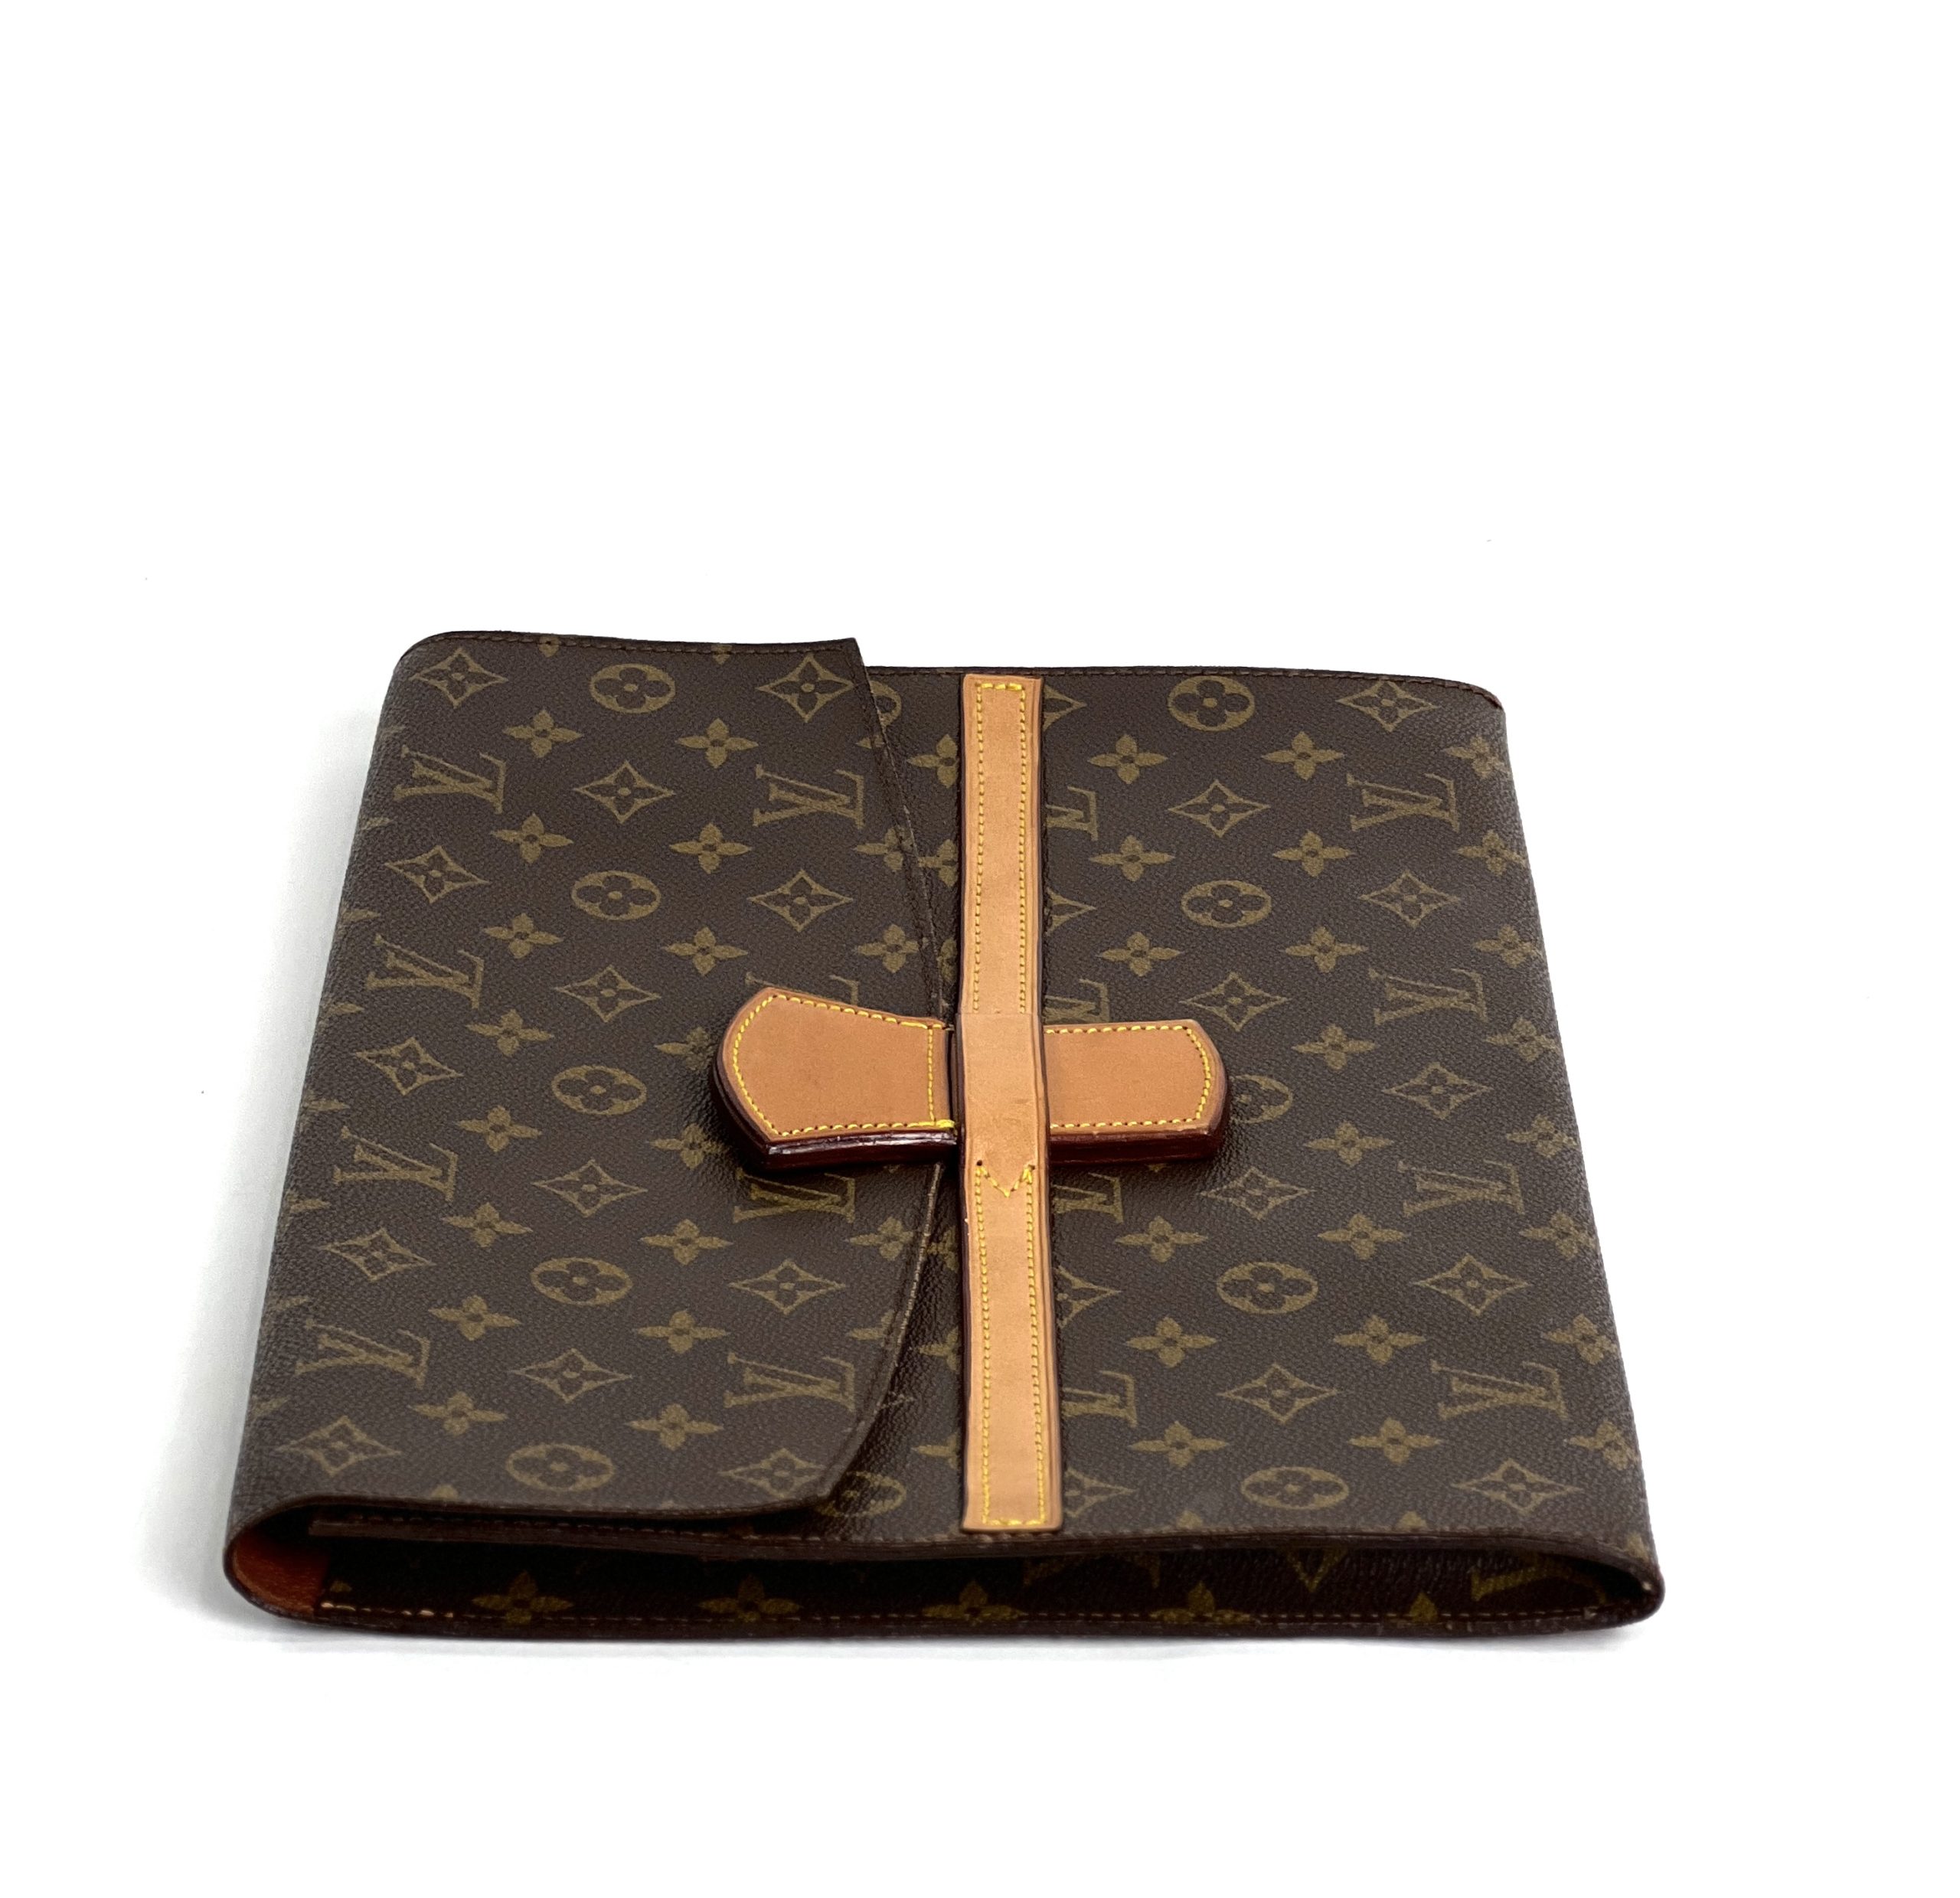 Classic Louis Vuitton iPad mini 4 Case